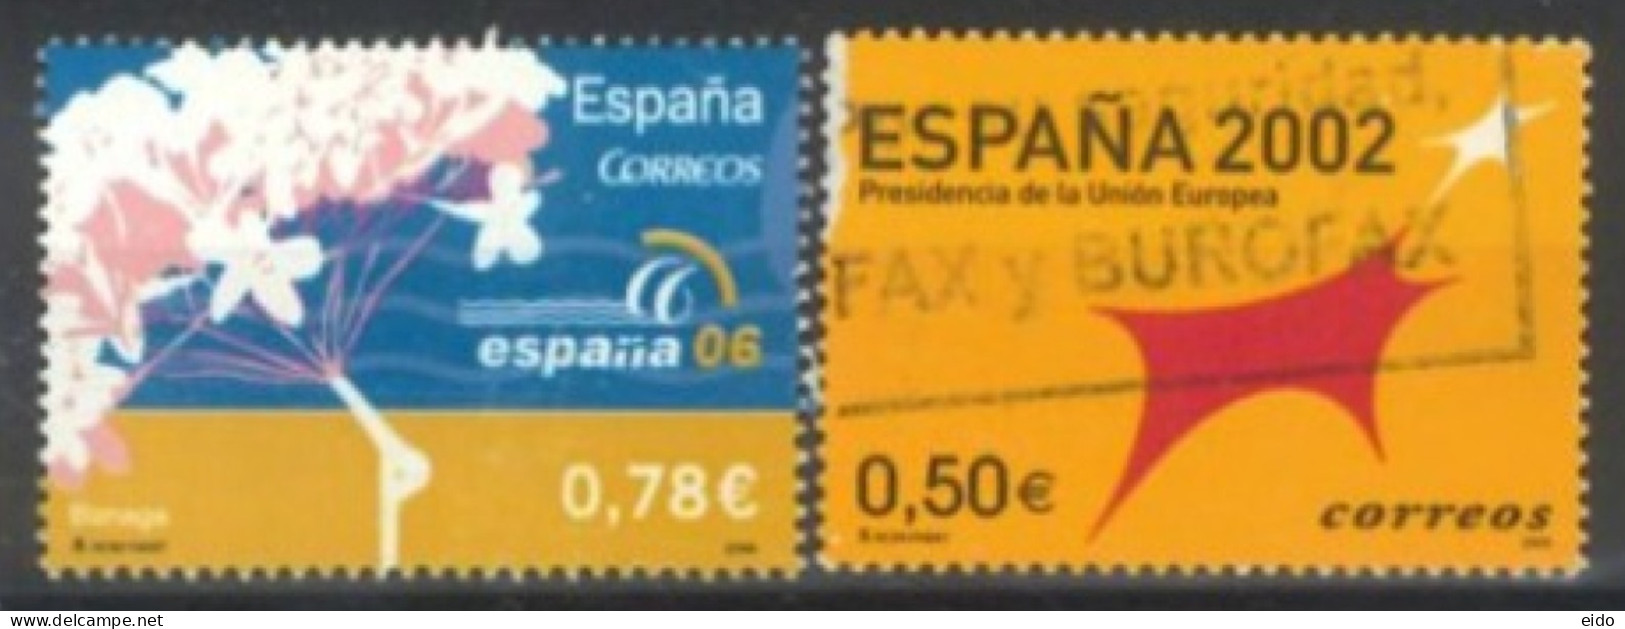 SPAIN, 2002/2006, ESPANA 2006 & 2002 STAMPS SET OF 2, USED. - Gebraucht